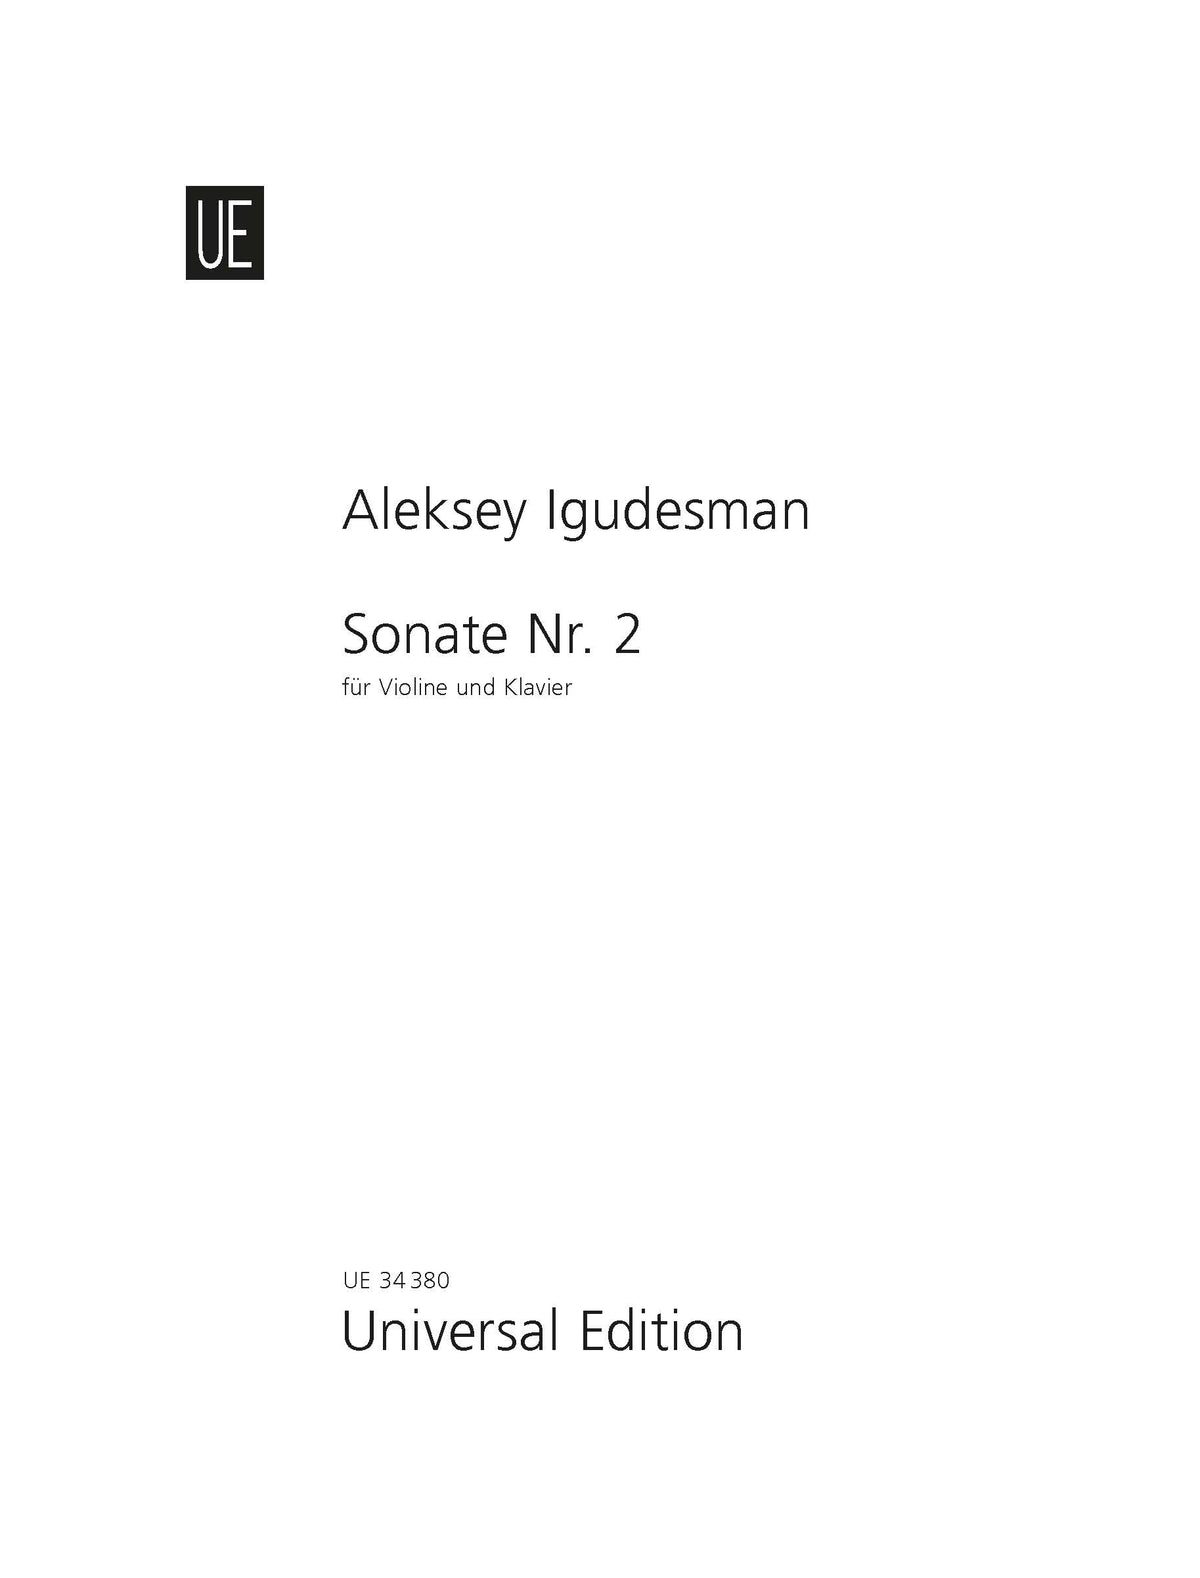 Igudesman Sonata No. 2 for violin and piano